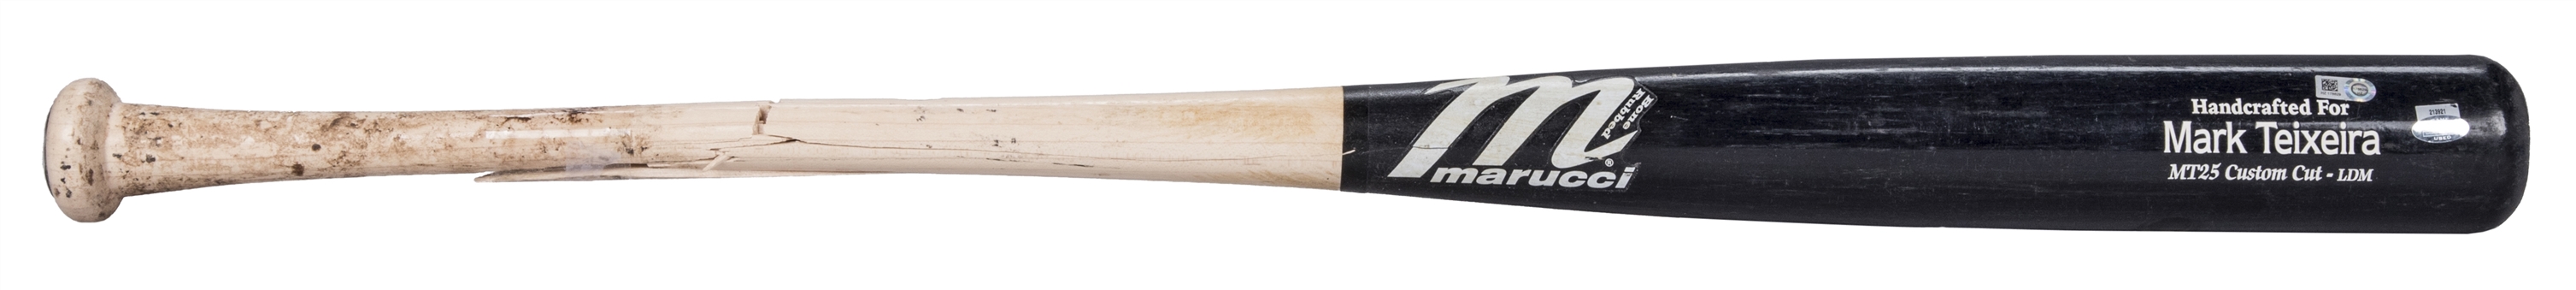 2014 Mark Teixeira Game Used Marucci MT25 Custom Cut Model Bat (MLB Authenticated & Steiner)